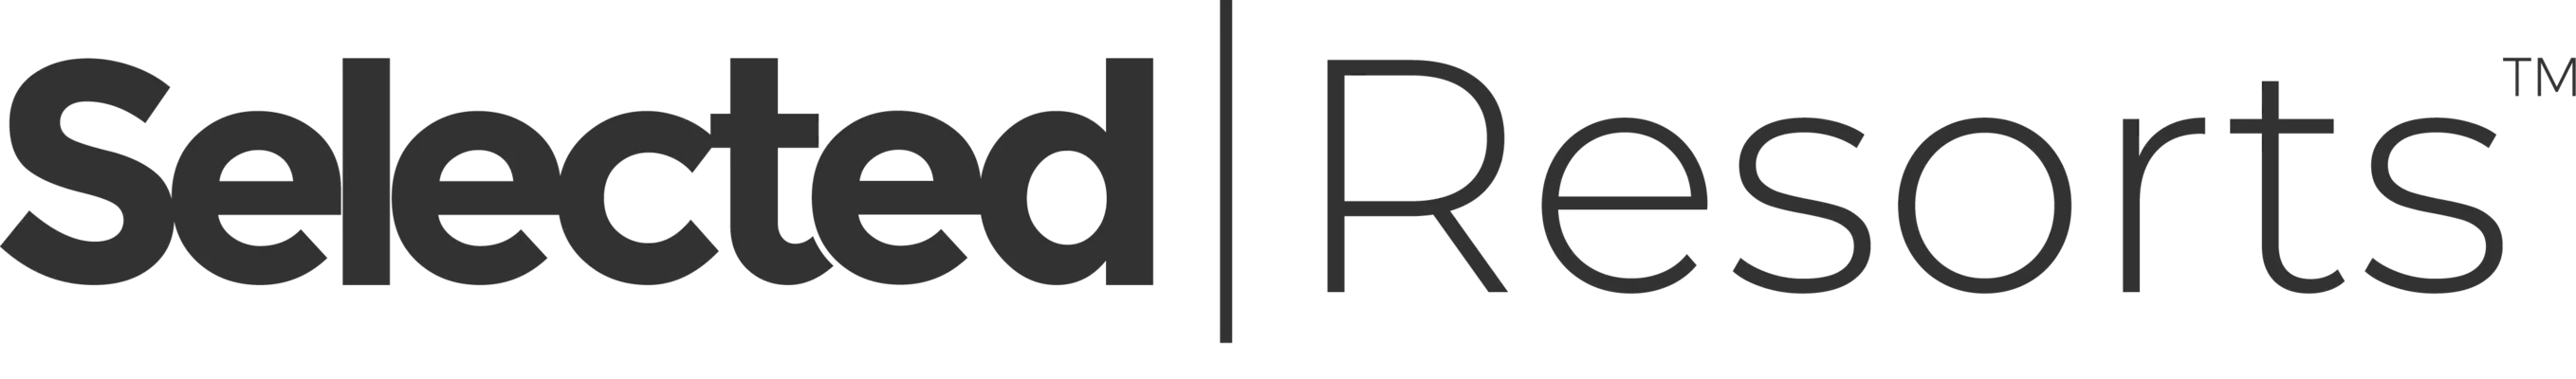 Resorts footer-logo